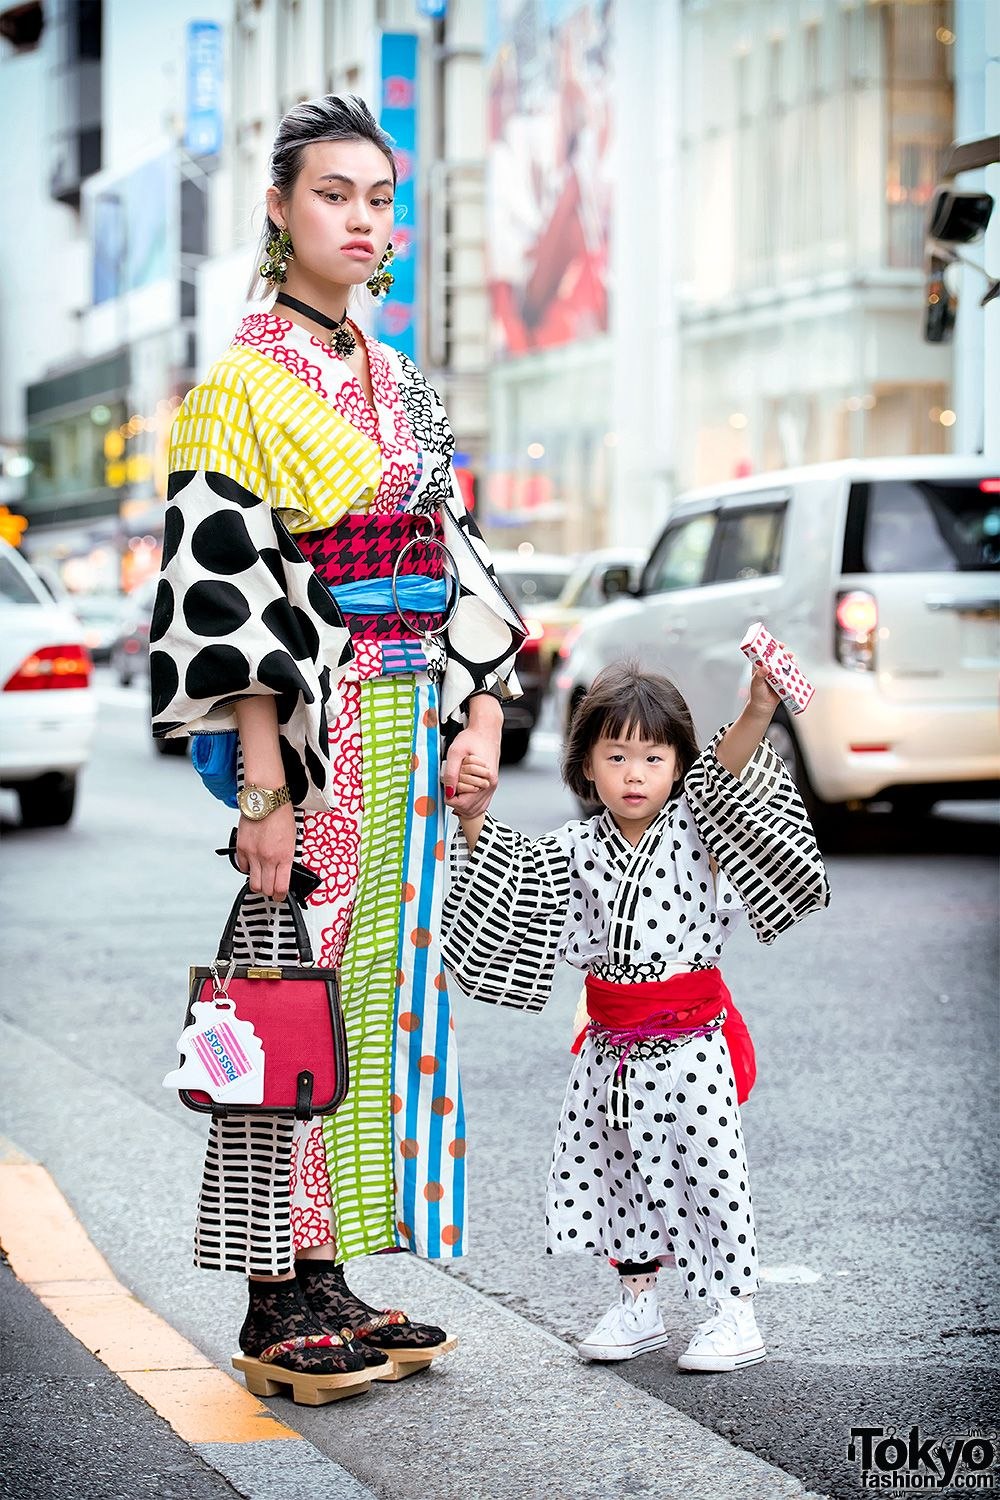 Токийские одежда. Хараджуку Токио стиль. Харадзюку стиль хаори. Харадзюку улица в Токио. Стрит стайл Токио мода.